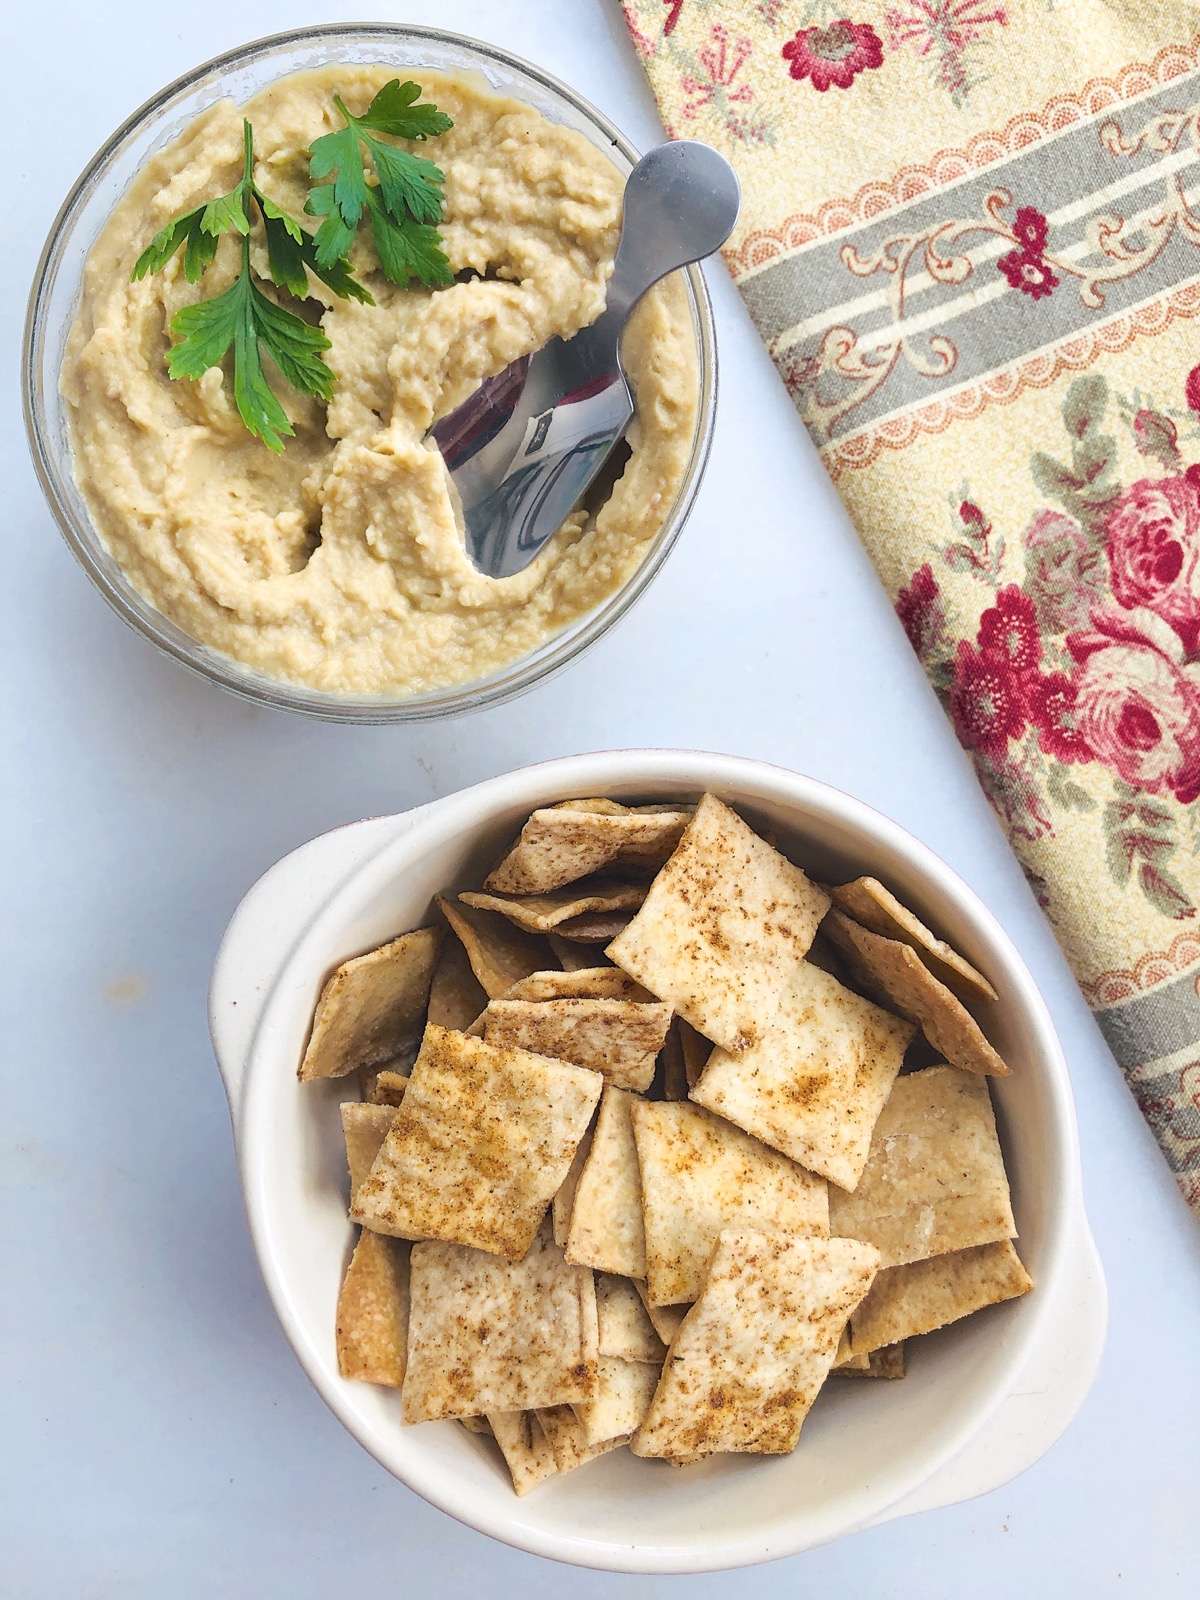 Sourdough crackers in a bowl, bowl of hummus alongside.